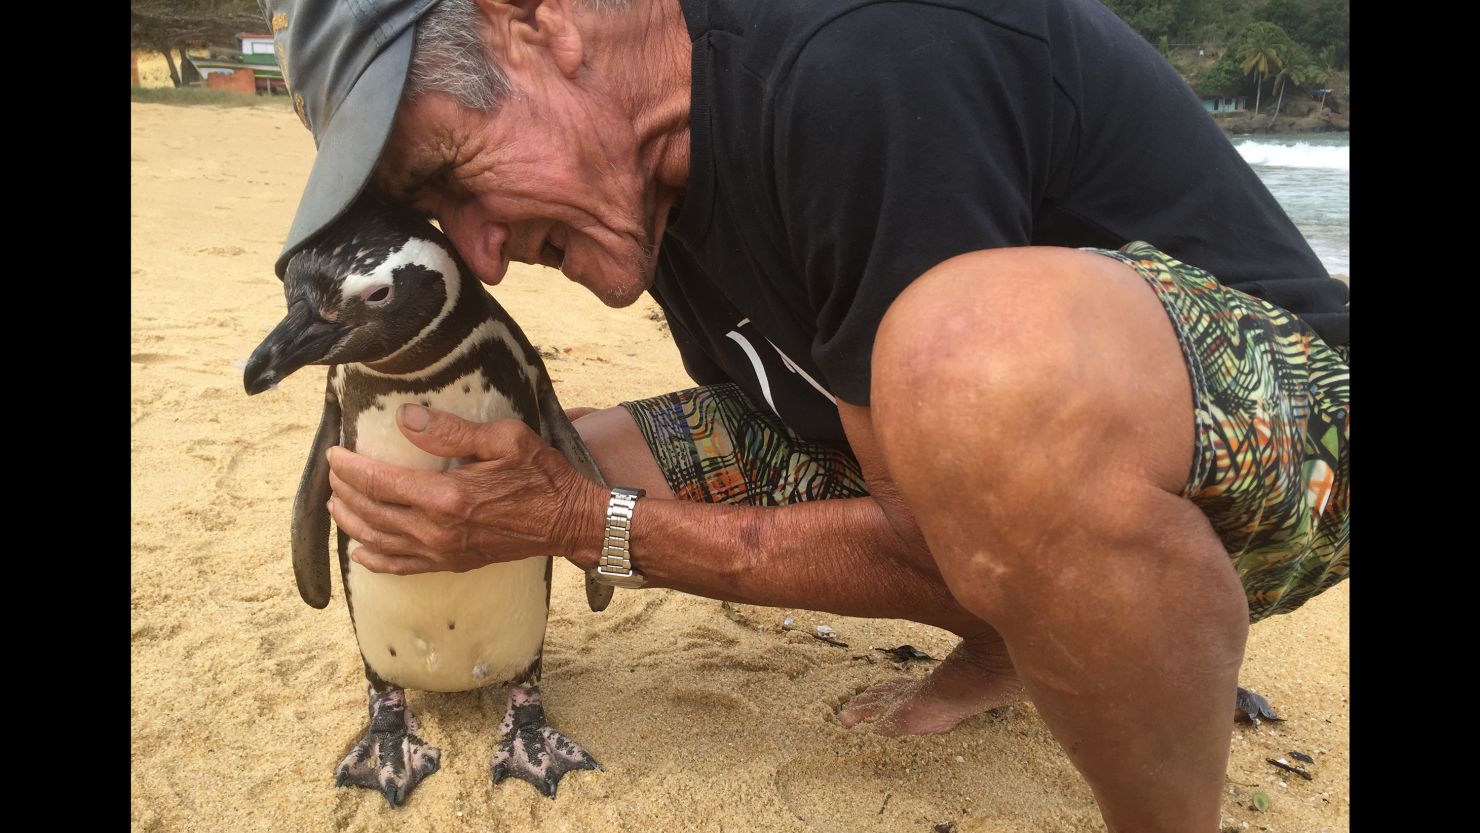 Pereira de Souza, a retired bricklayer, has a true friend in penguin Dindim.